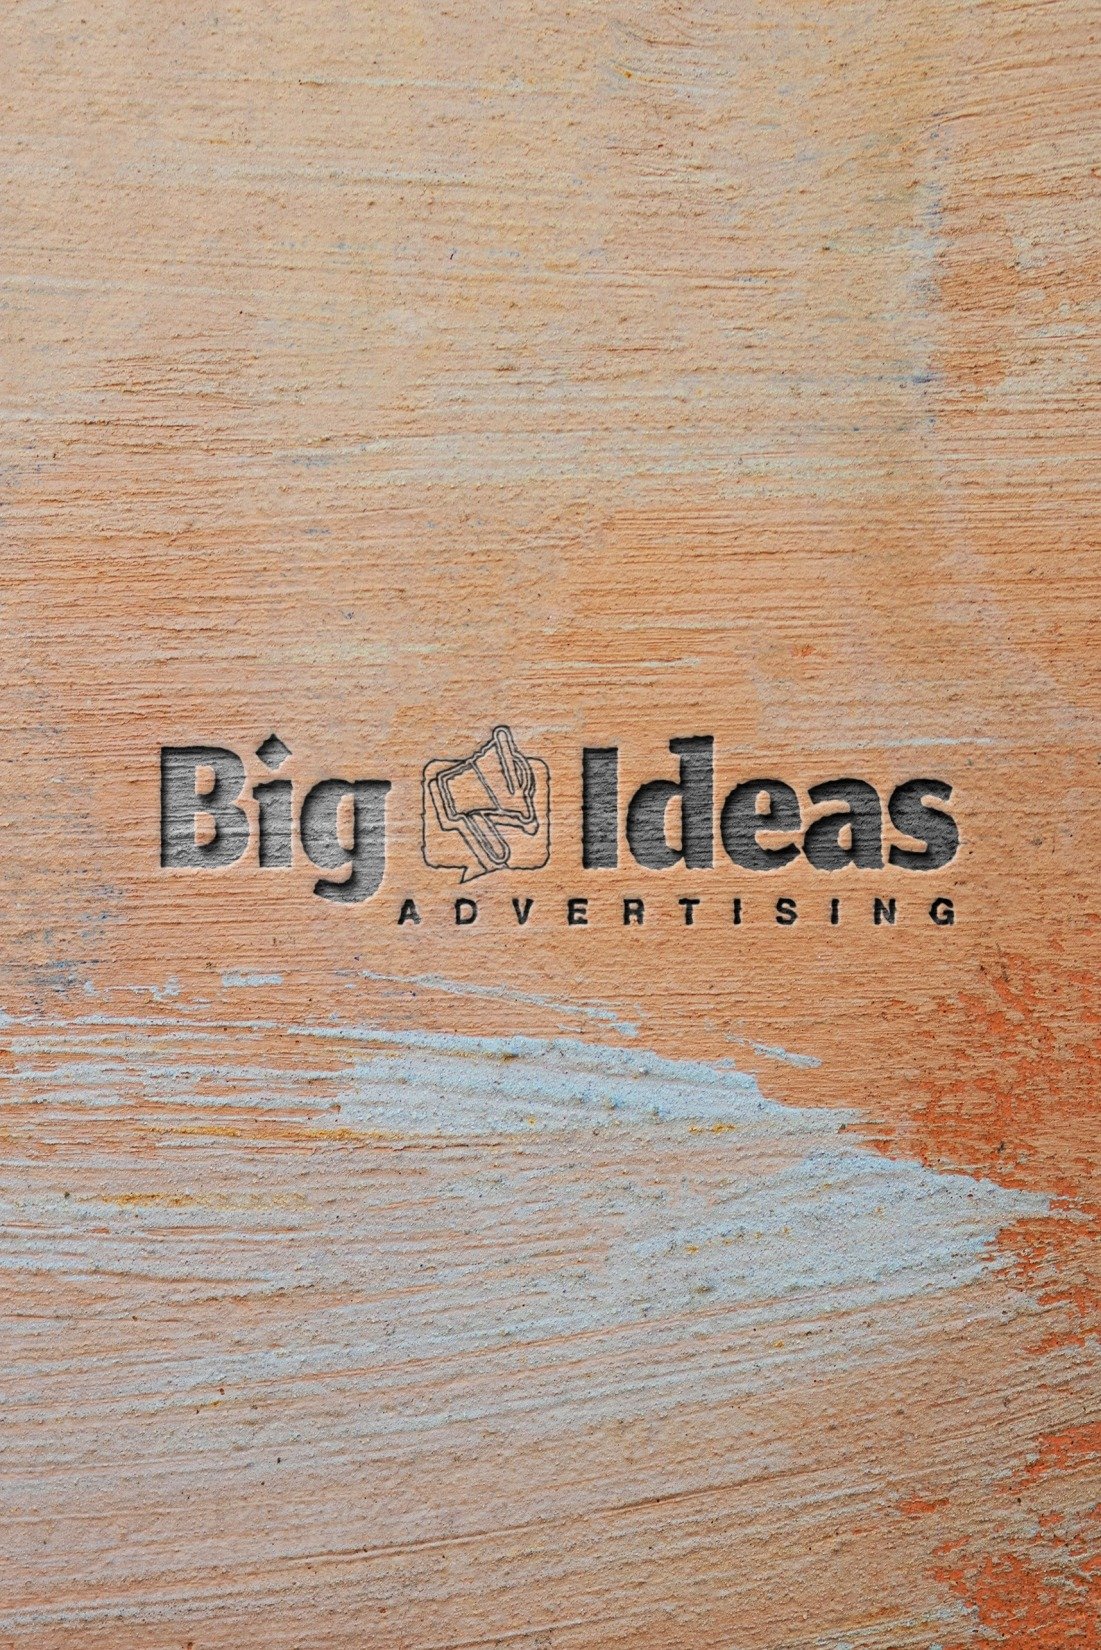 Big Ideas Advertising